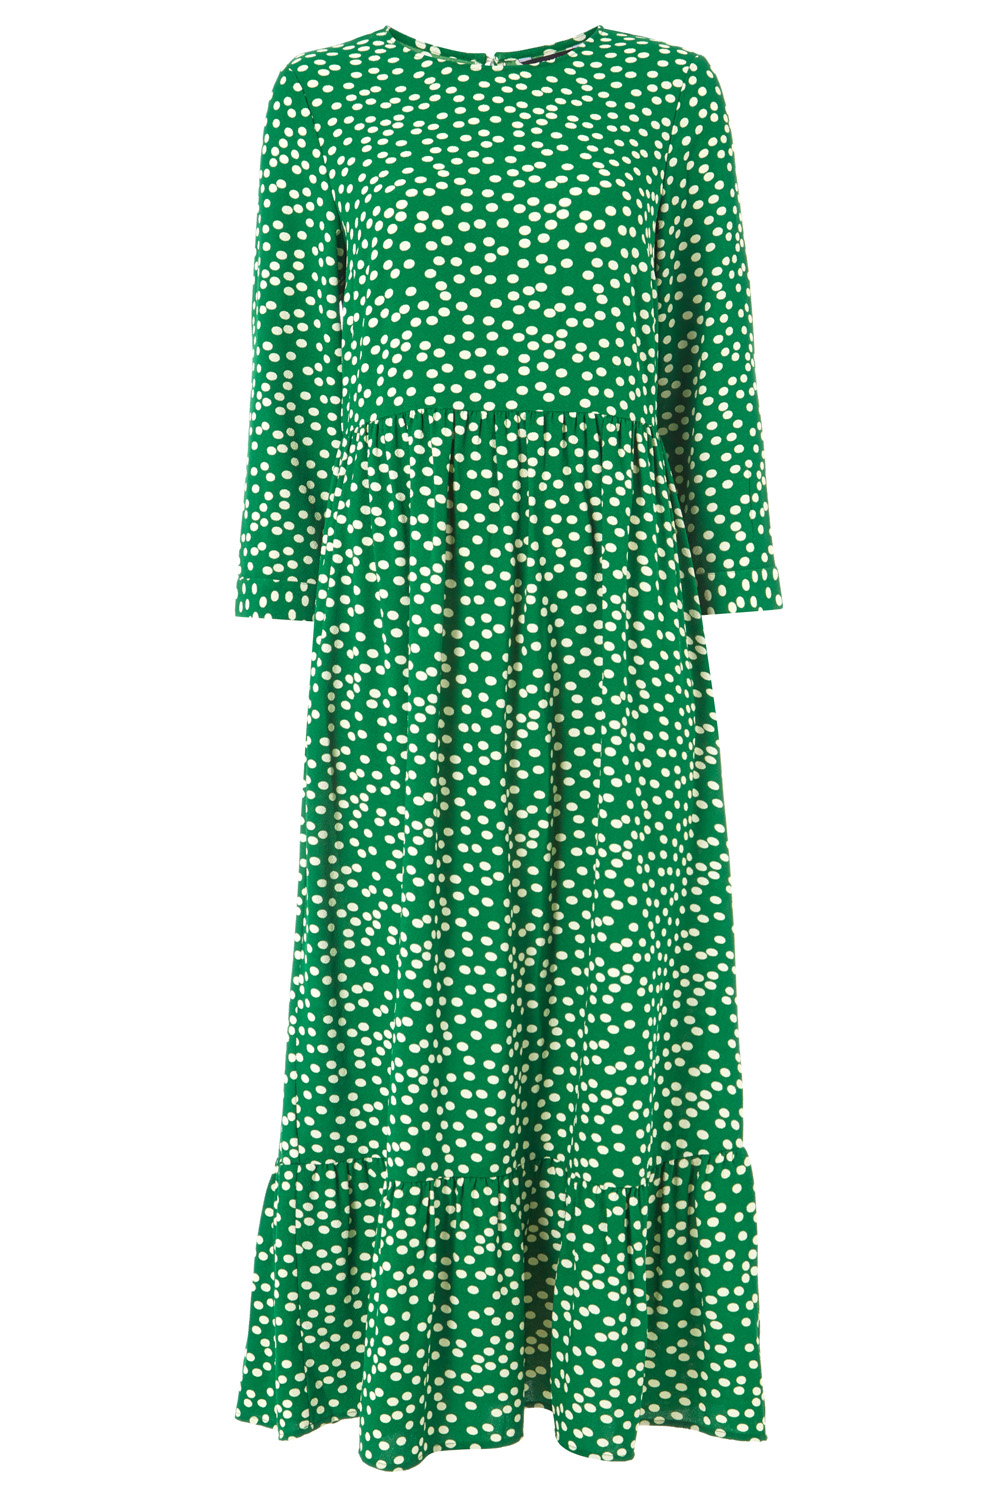 Green Polka Dot Print Tiered Maxi Dress, Image 5 of 5